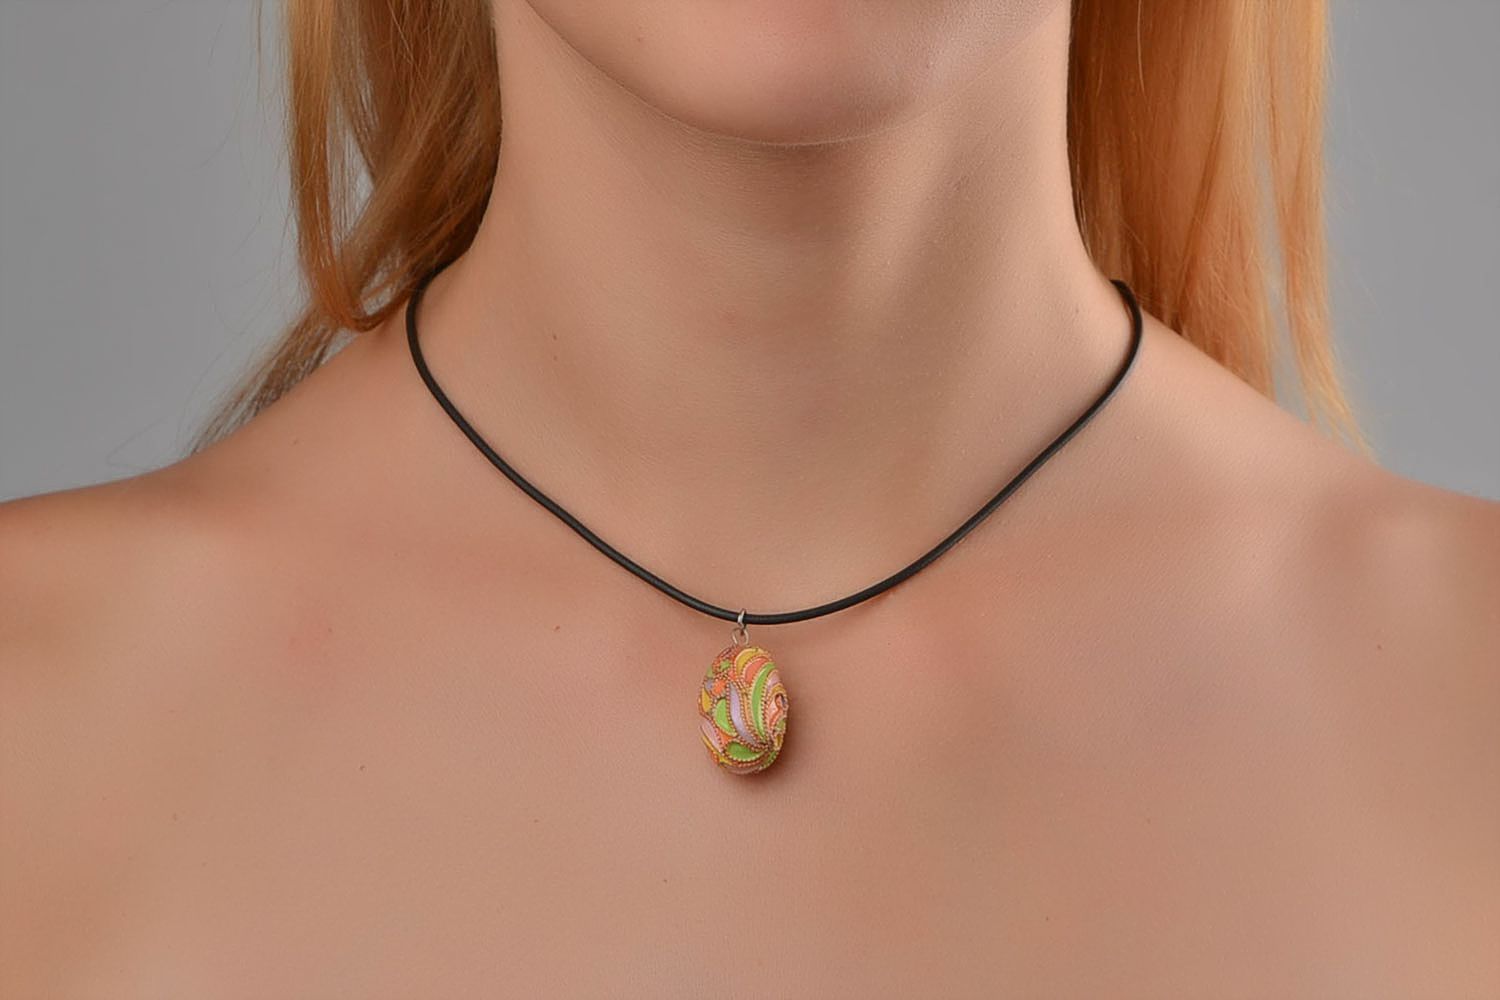 Wooden jewelry handmade pendant necklace designer jewelry women accessories photo 1